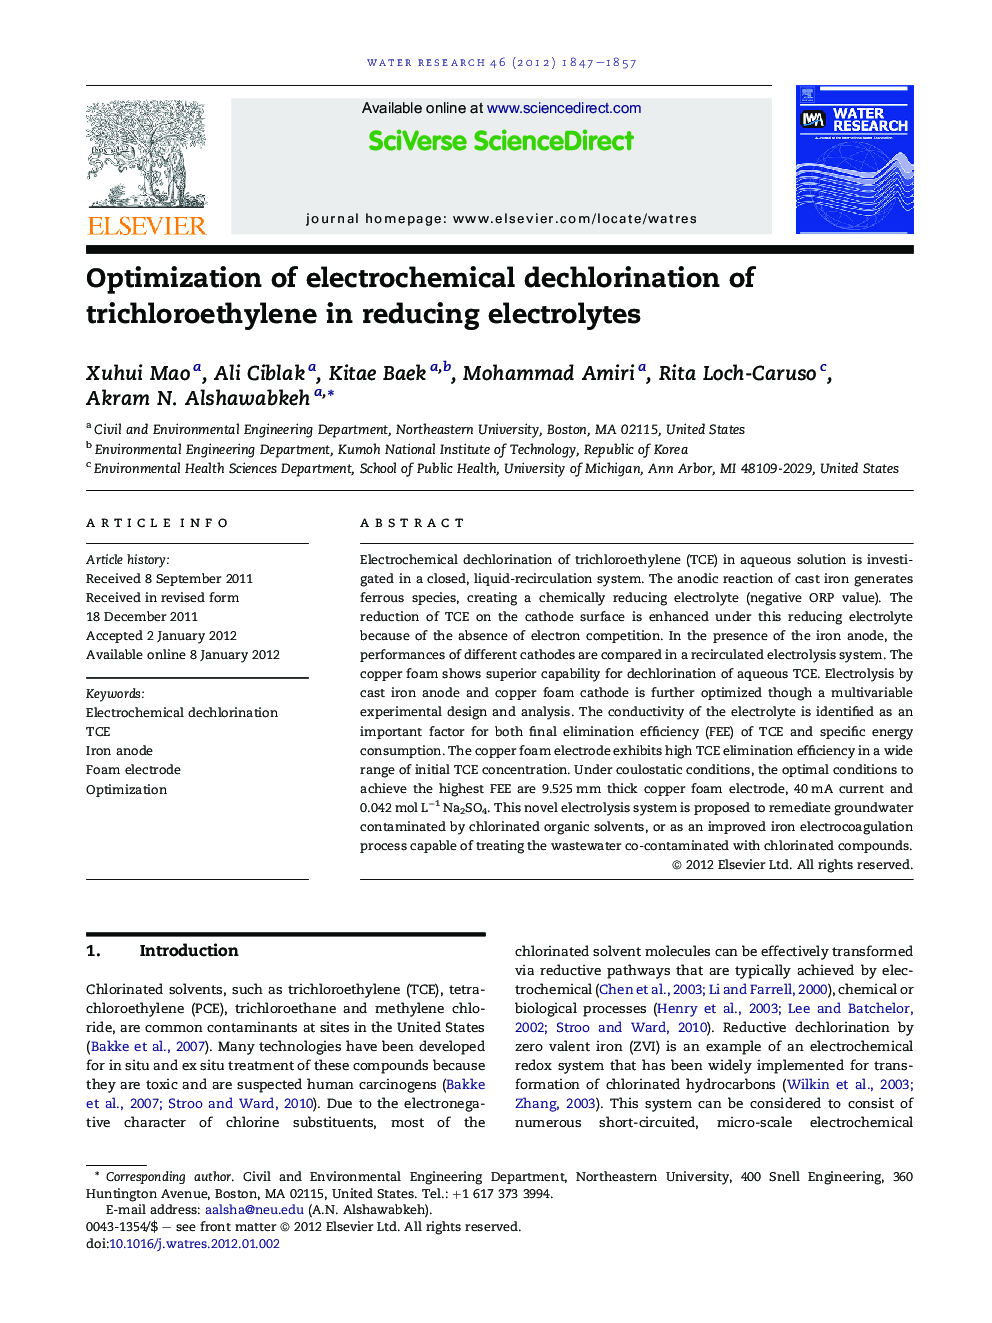 Optimization of electrochemical dechlorination of trichloroethylene in reducing electrolytes